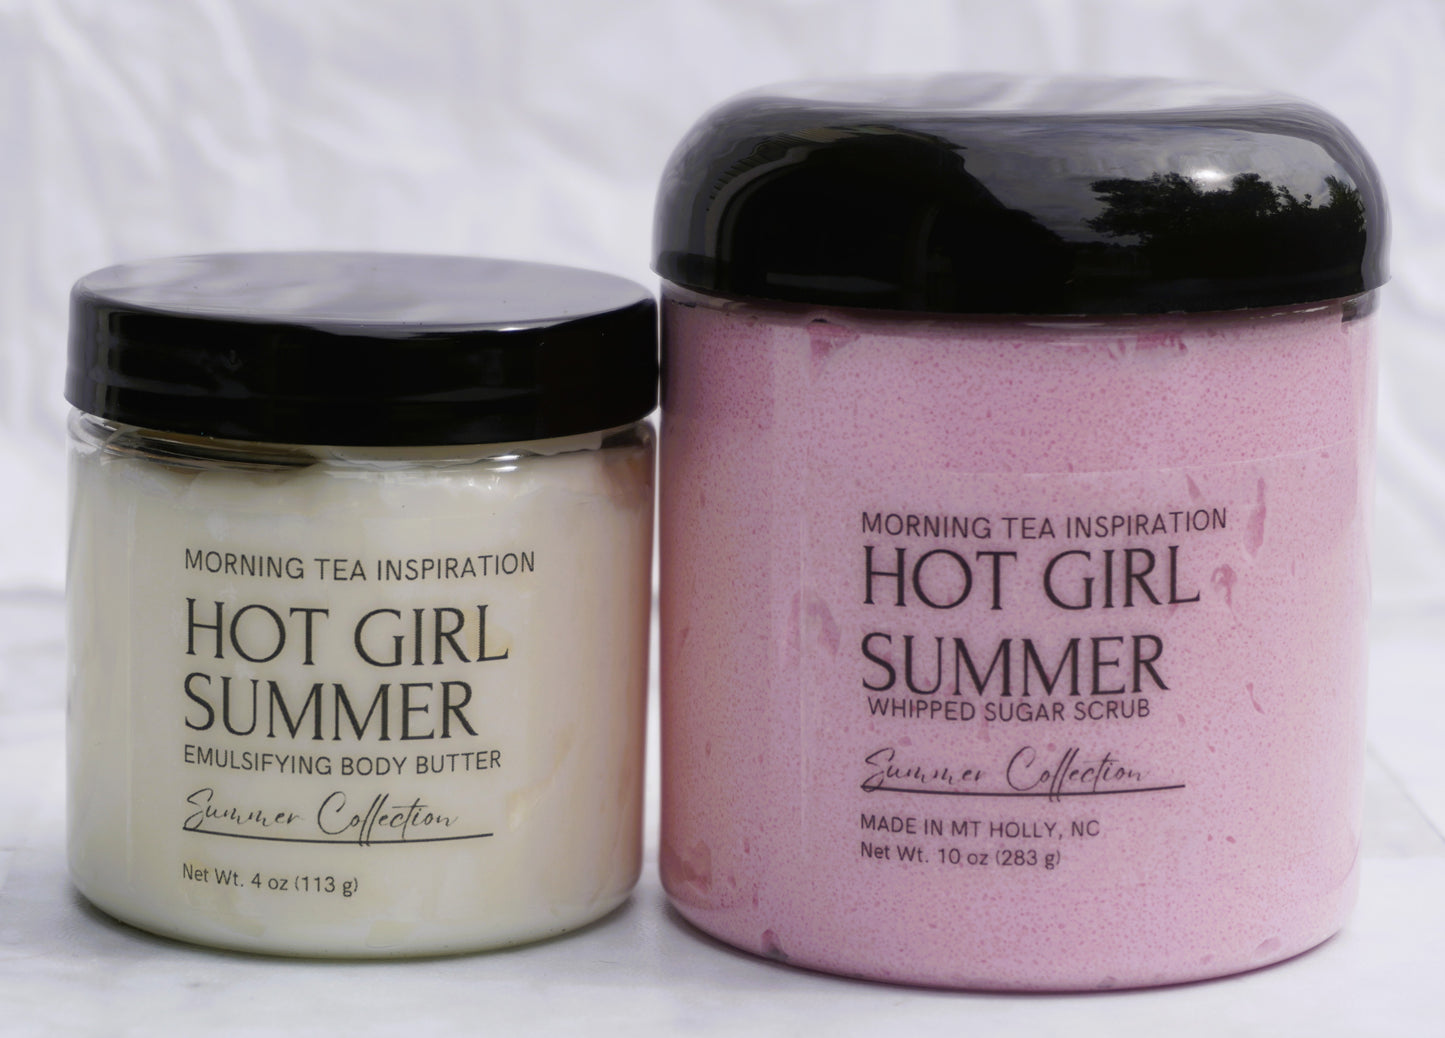 Hot Girl Summer Emulsified Body Butter (4 oz)